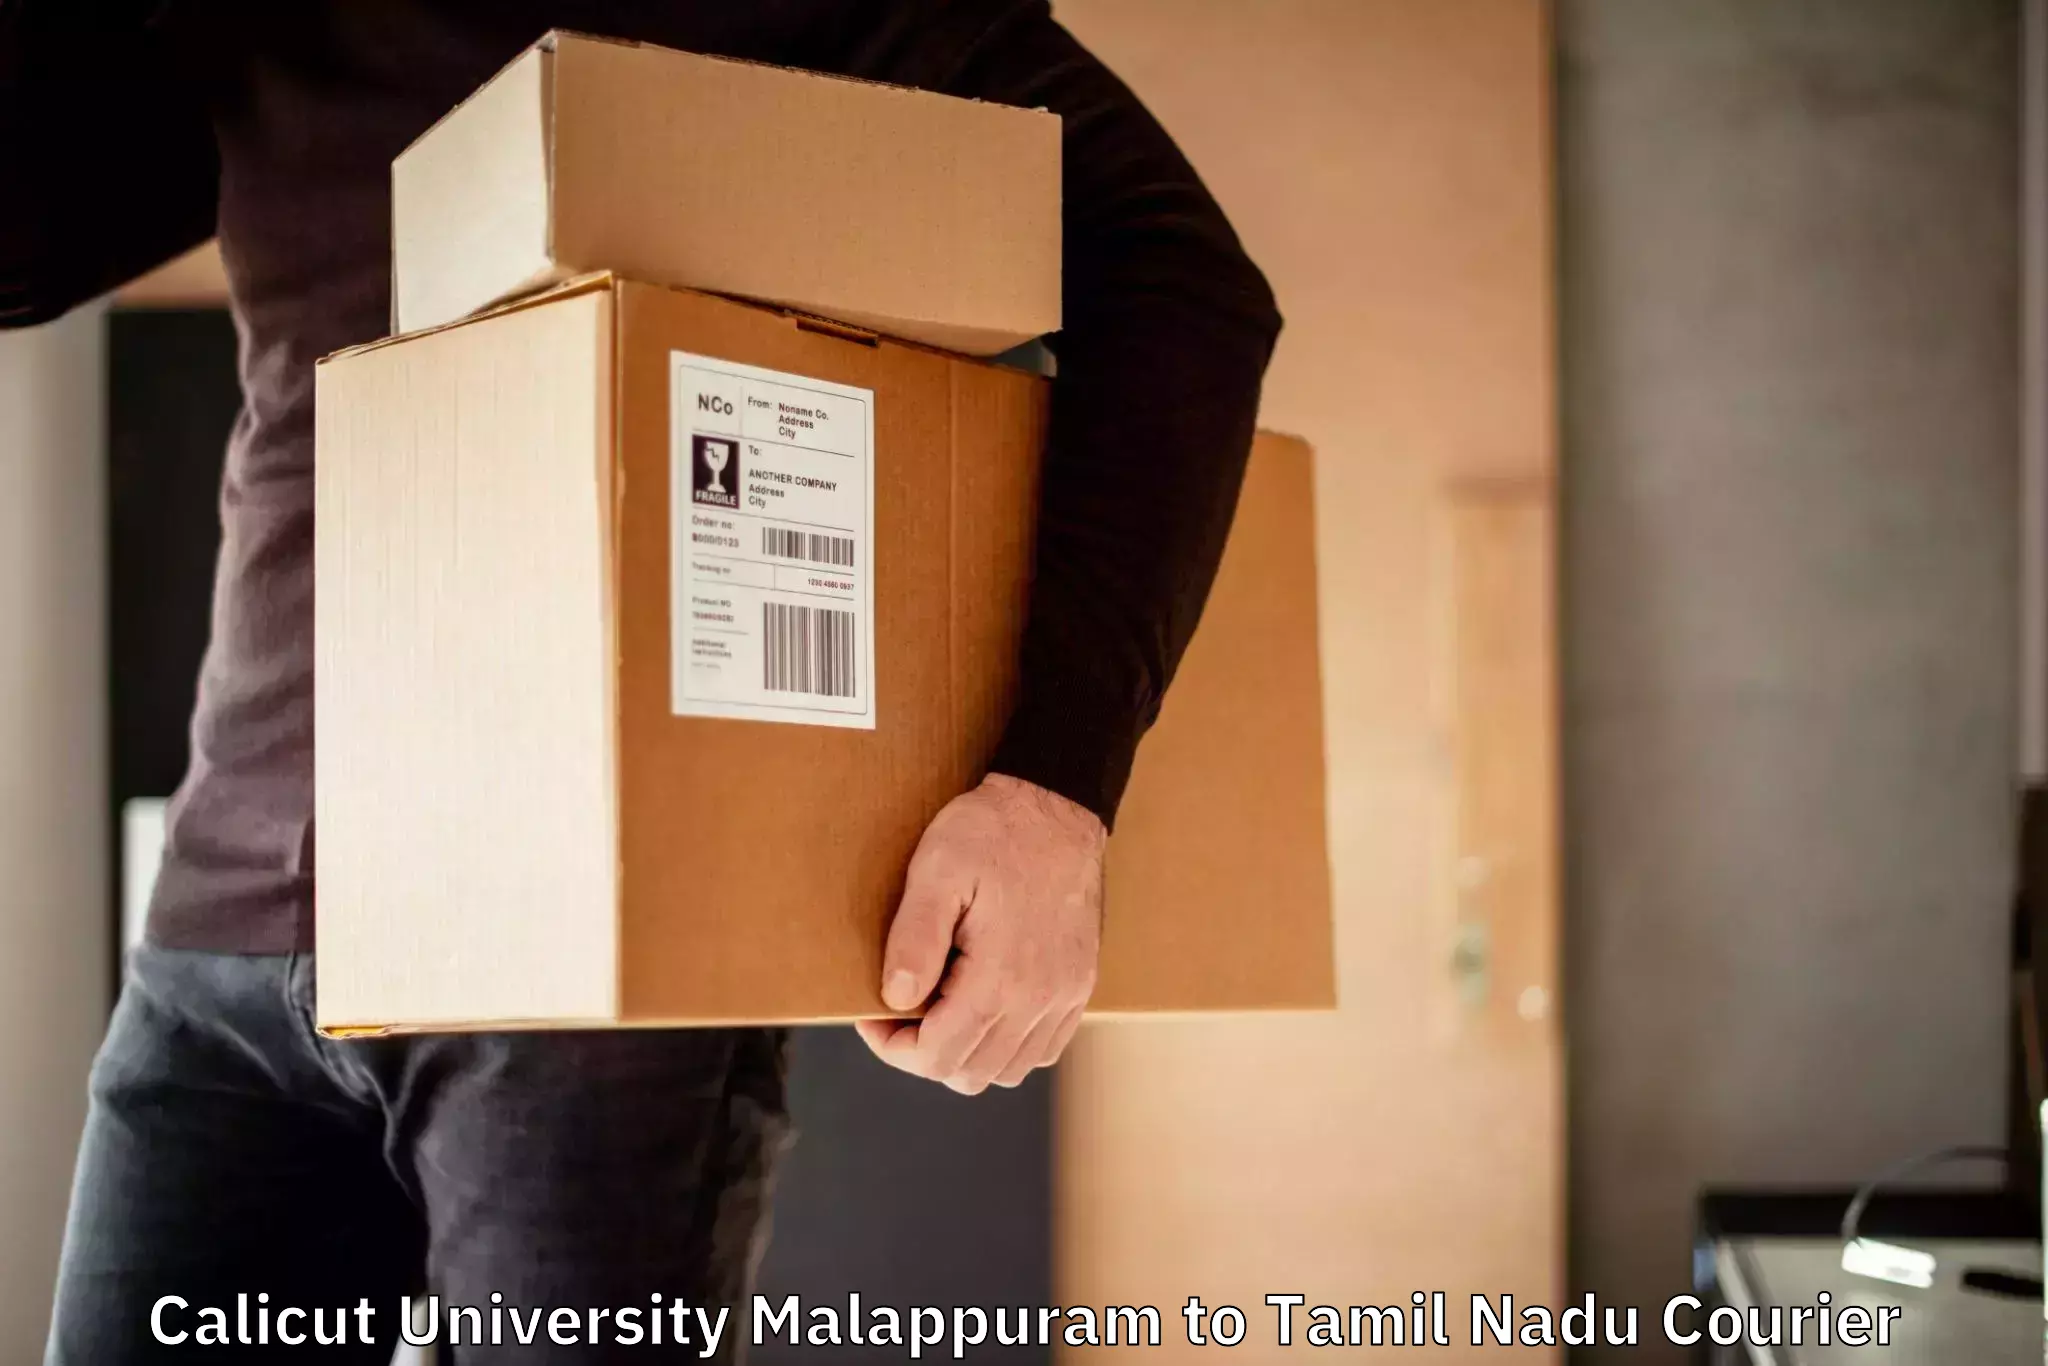 Courier service innovation Calicut University Malappuram to Tiruvallur